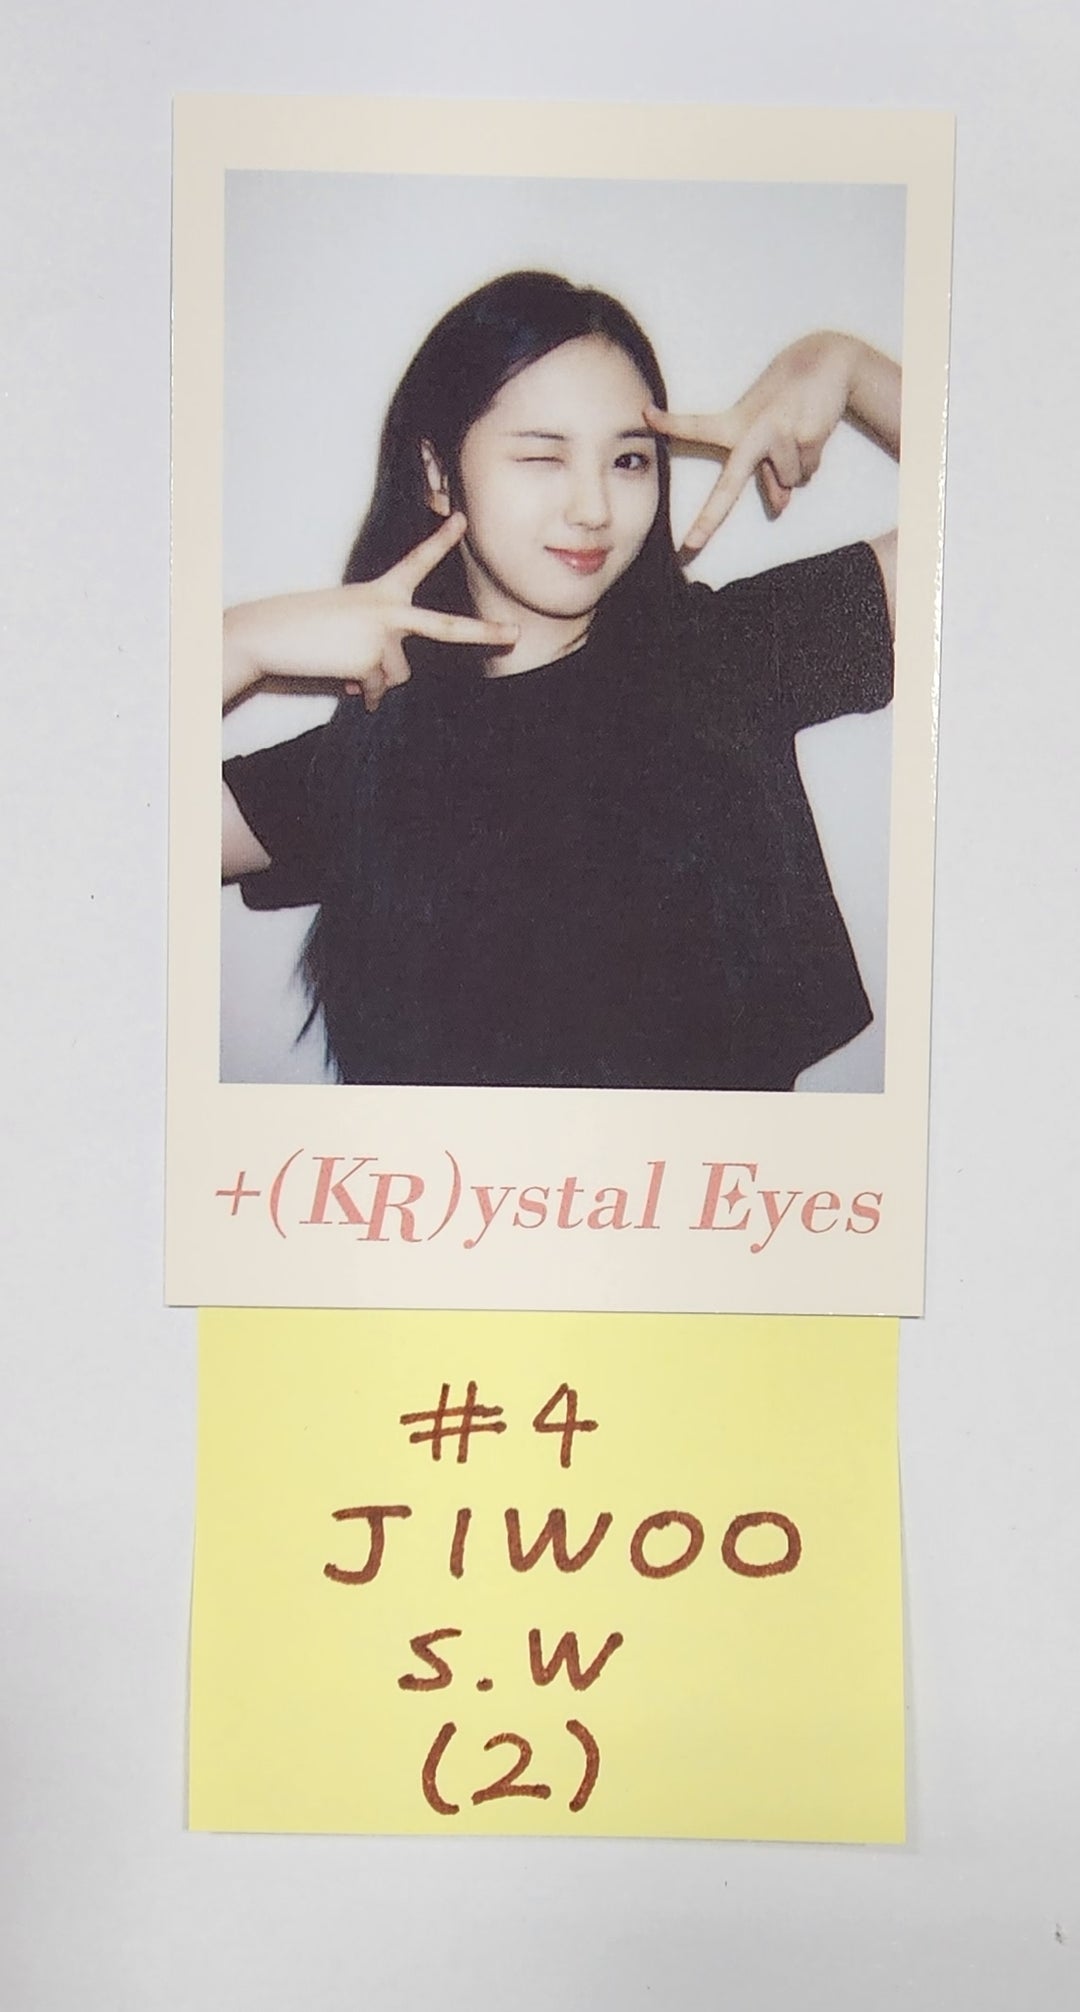 +(KR)ystal Eyes "AESTHETIC" - Soundwave Fansign Event Polaroid Type Photocard